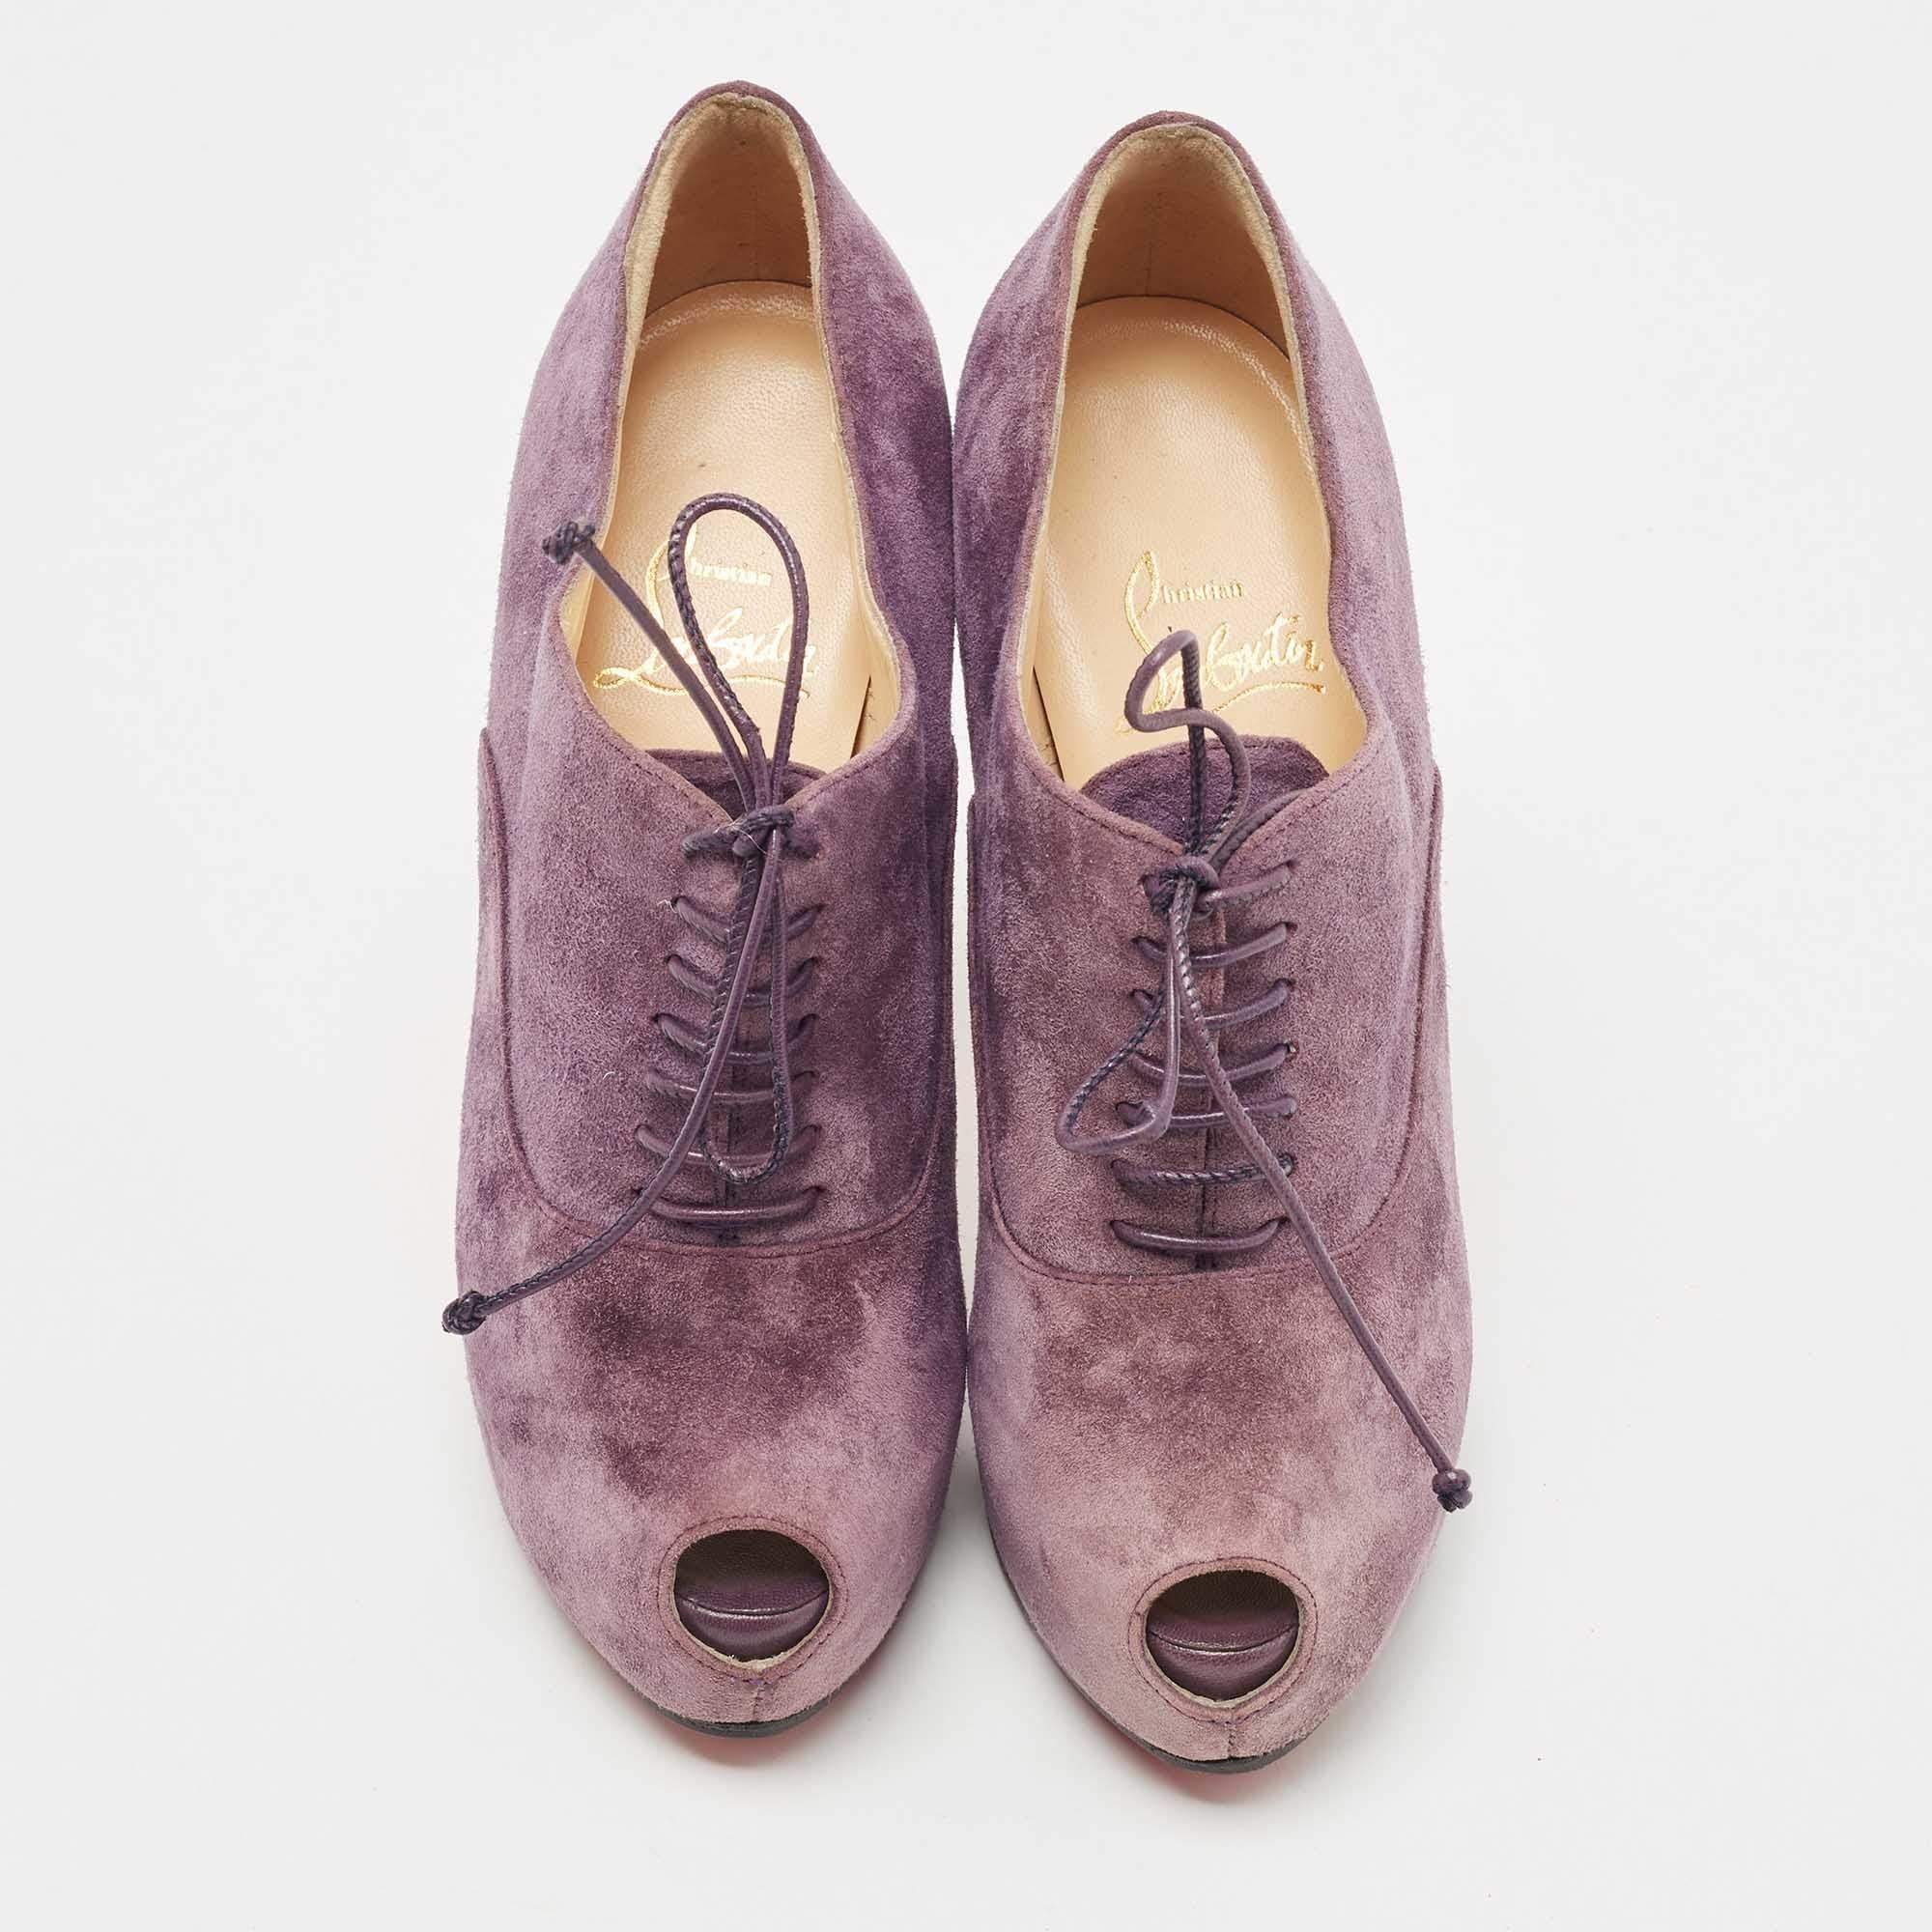 Christian Louboutin Purple Suede Peep Toe Lace Up Booties Size 35.5 In Excellent Condition For Sale In Dubai, Al Qouz 2